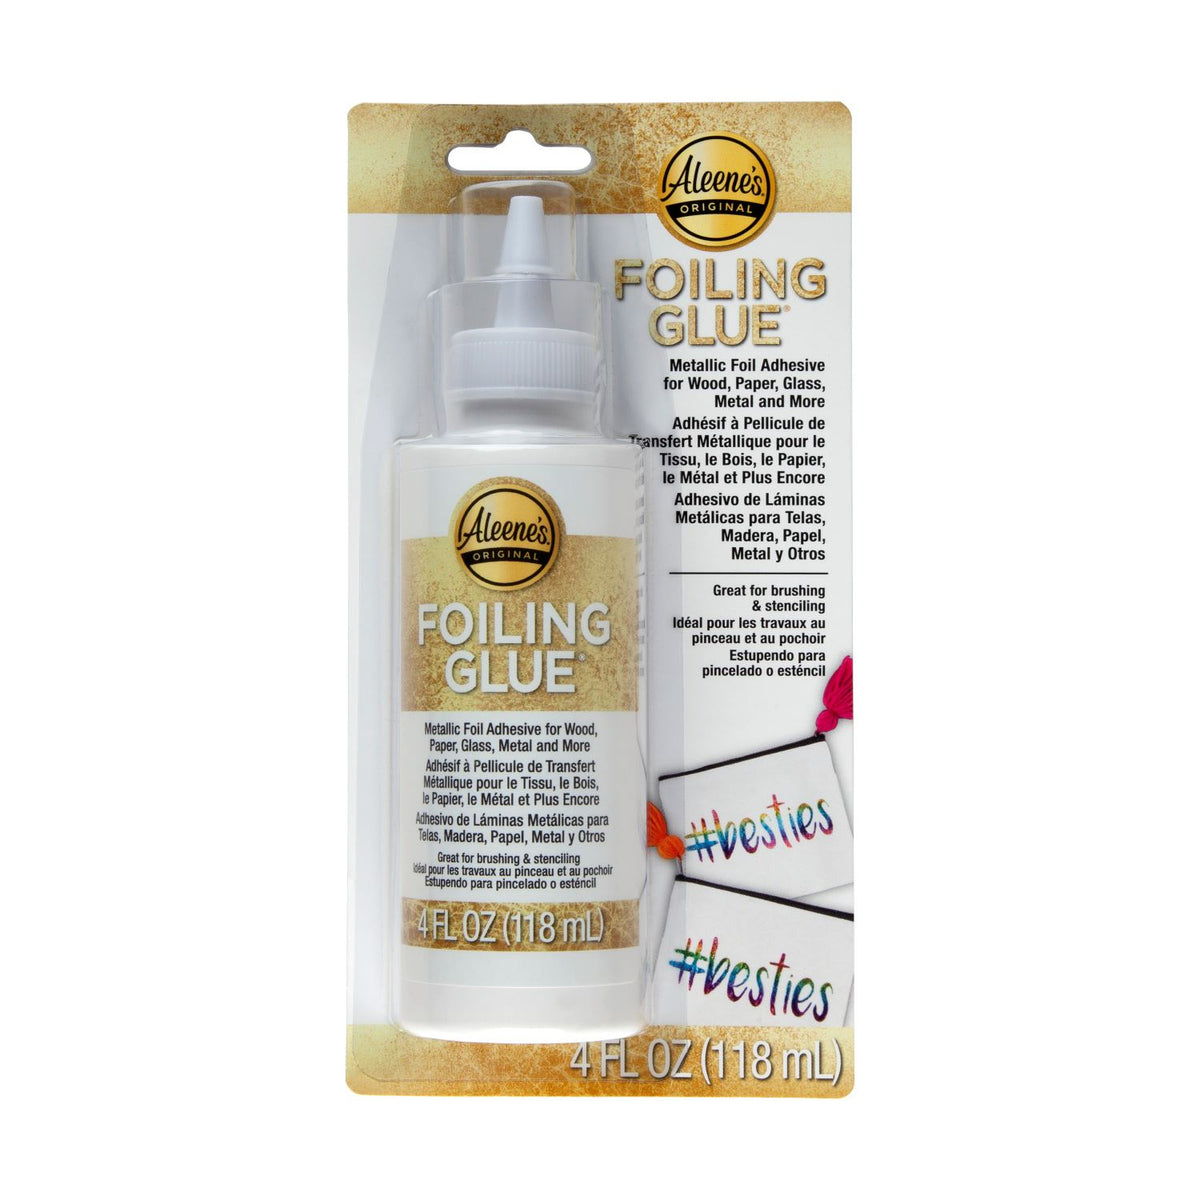 Aleene's Original Glues - Aleenes Flexible Stretchable Fabric Glue